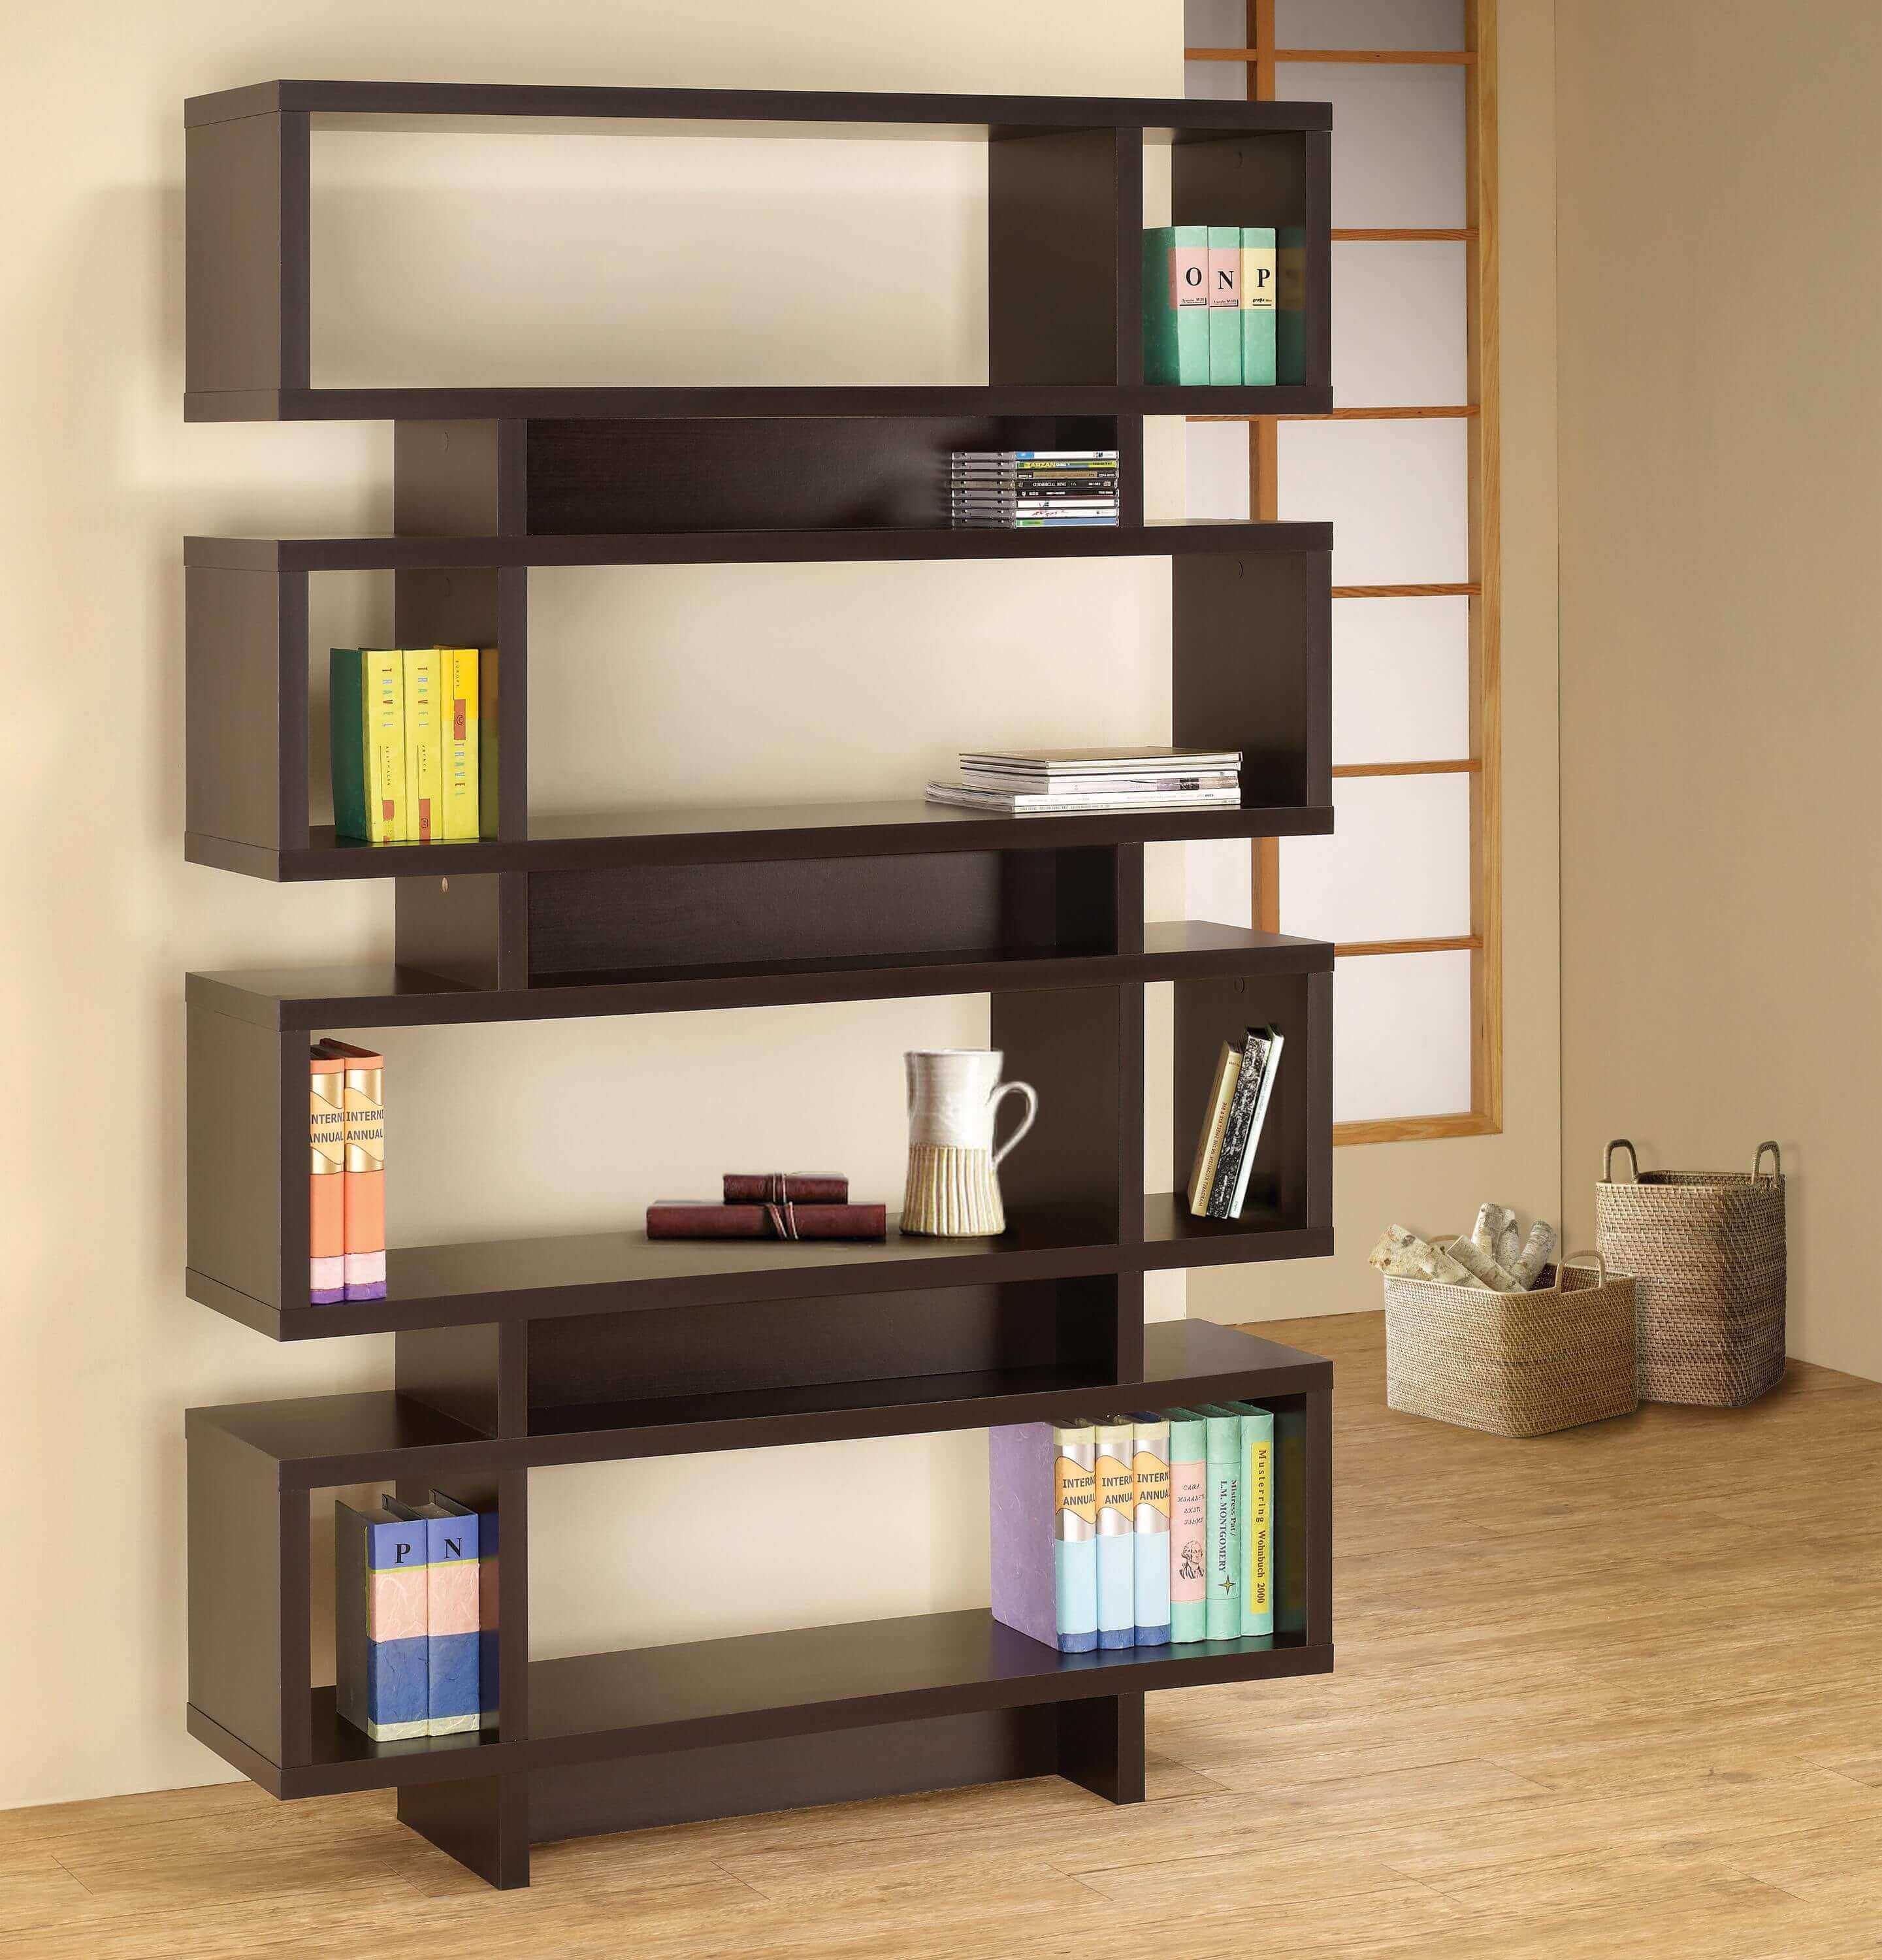 Creative Bookshelf Design That Looks Like Home Library - Live Enhanced